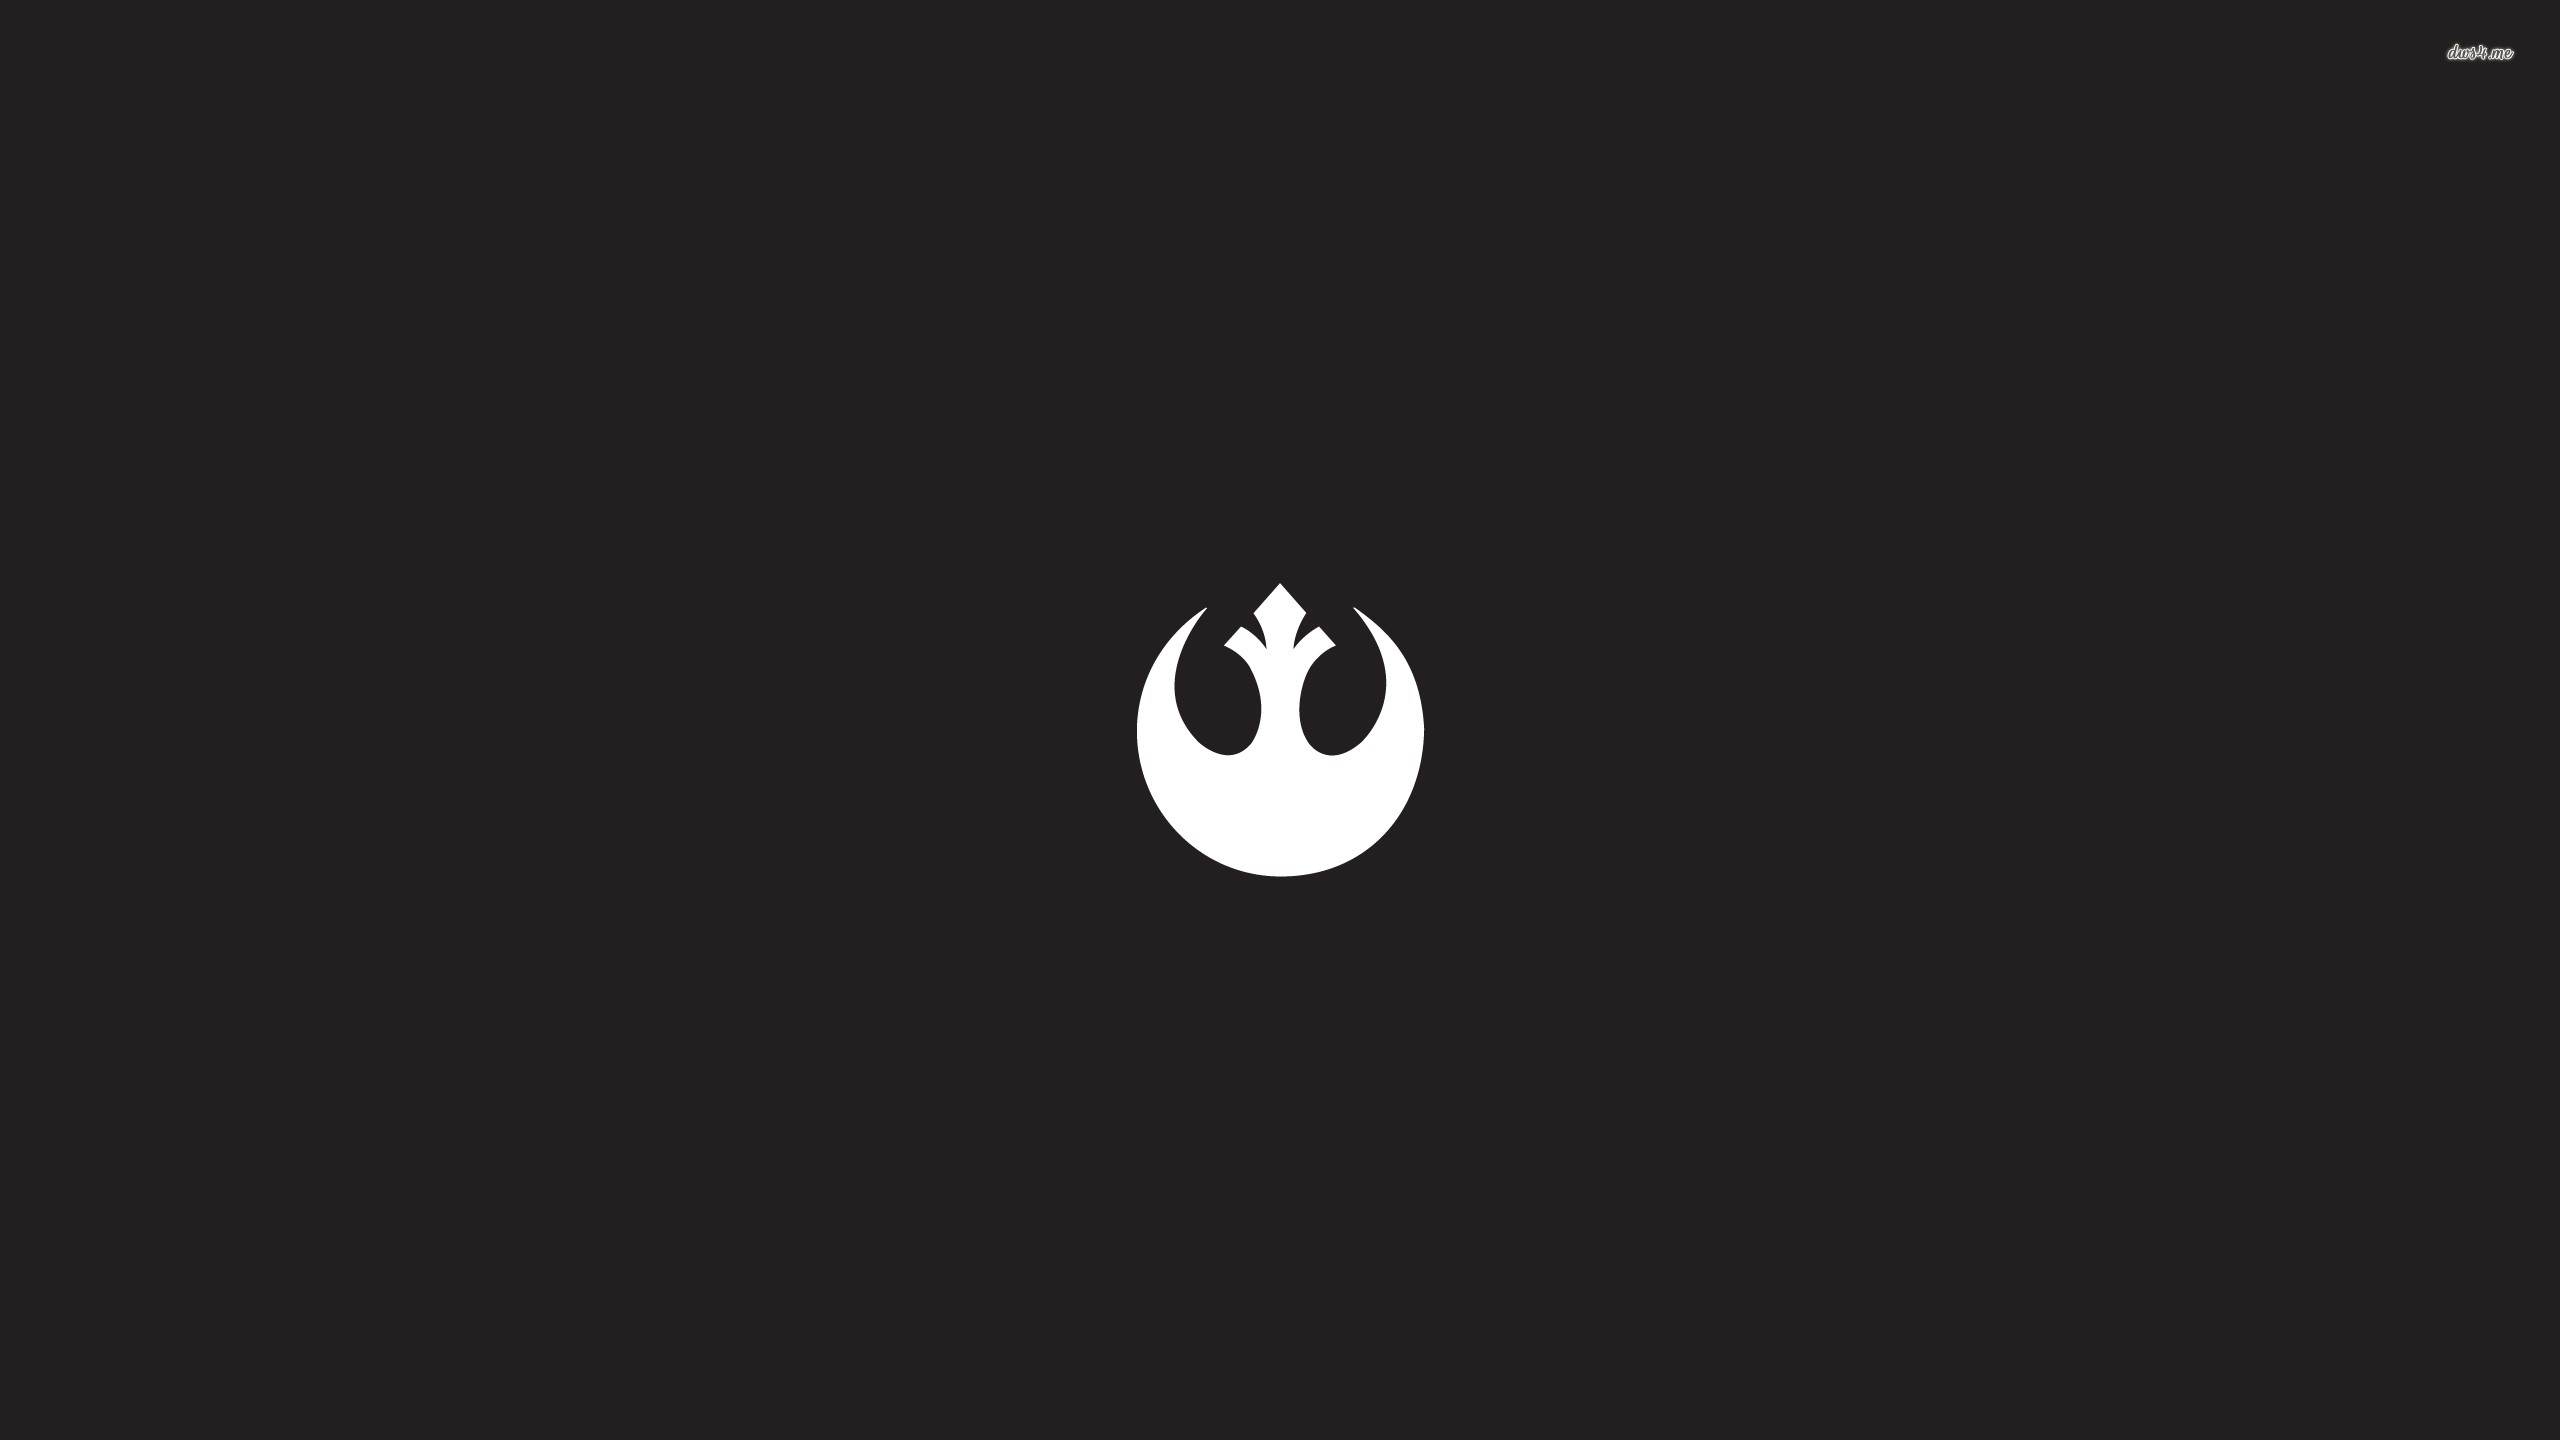 Rebel Alliance – Star Wars wallpaper